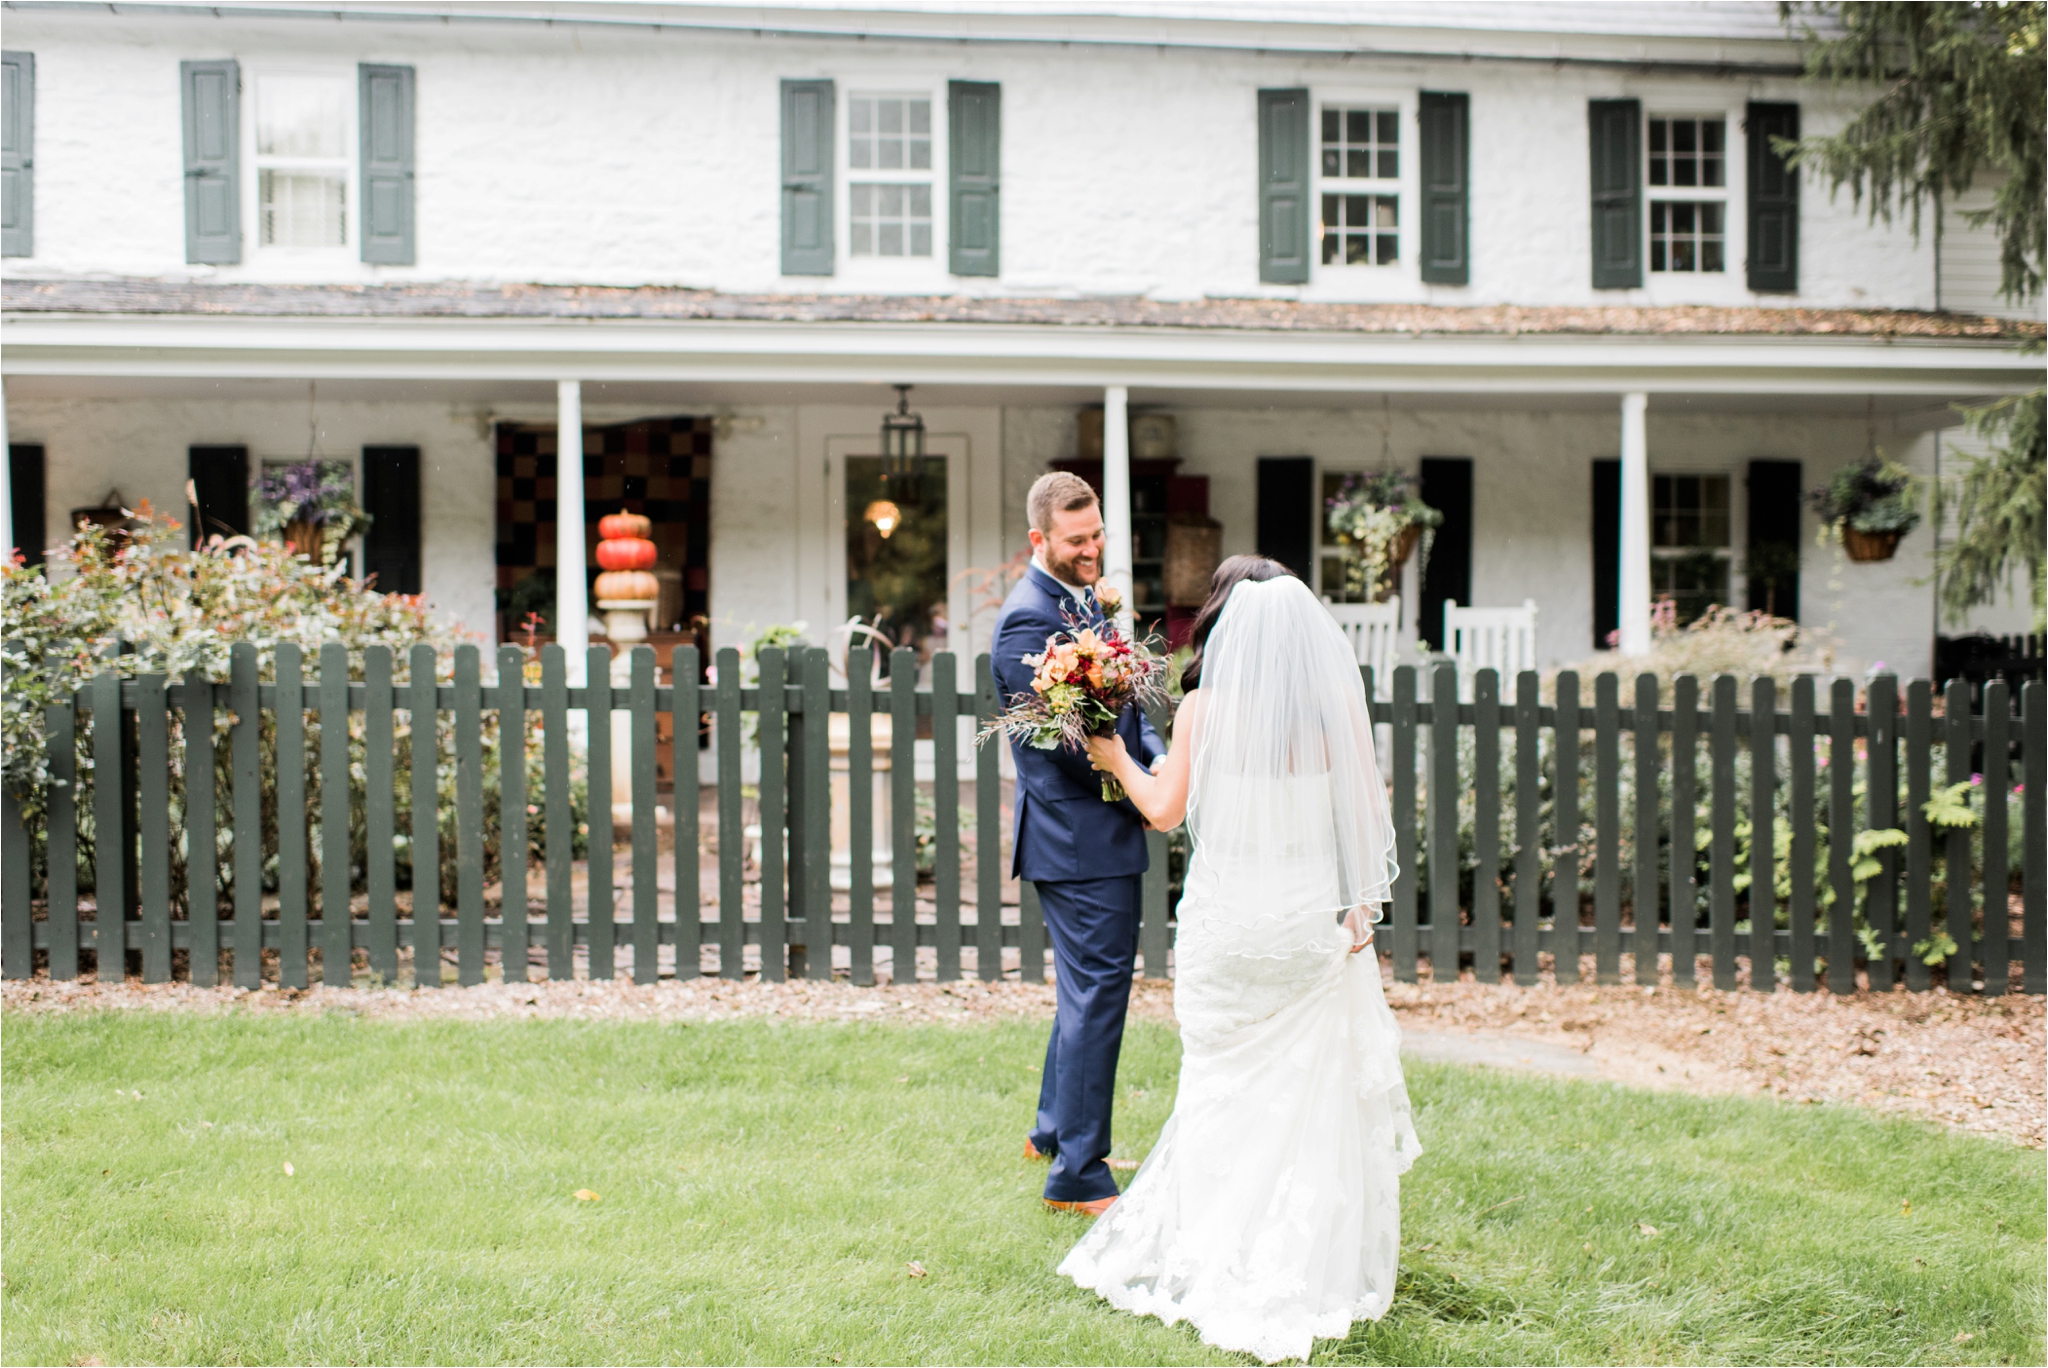 Emerald Fall Pennsylvania Wedding at the Bear Mill Estate by Hillary Muelleck Photography // hillarymuelleck.com